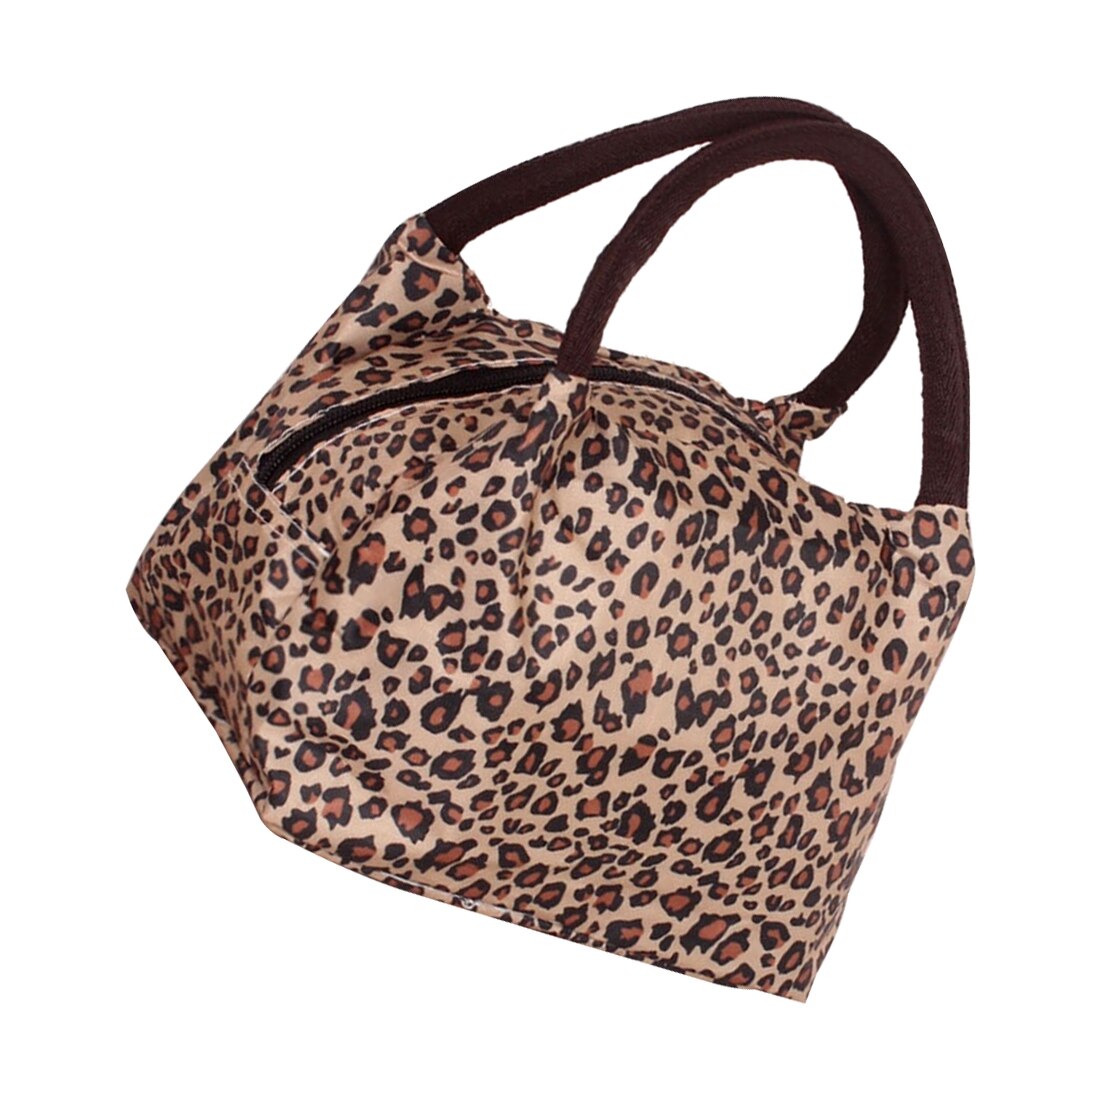 Lady's fashion oxford bag women Handbags lunch shoulder bags for female Messenger Bags(Style 6 Tu Leopard) - ebowsos